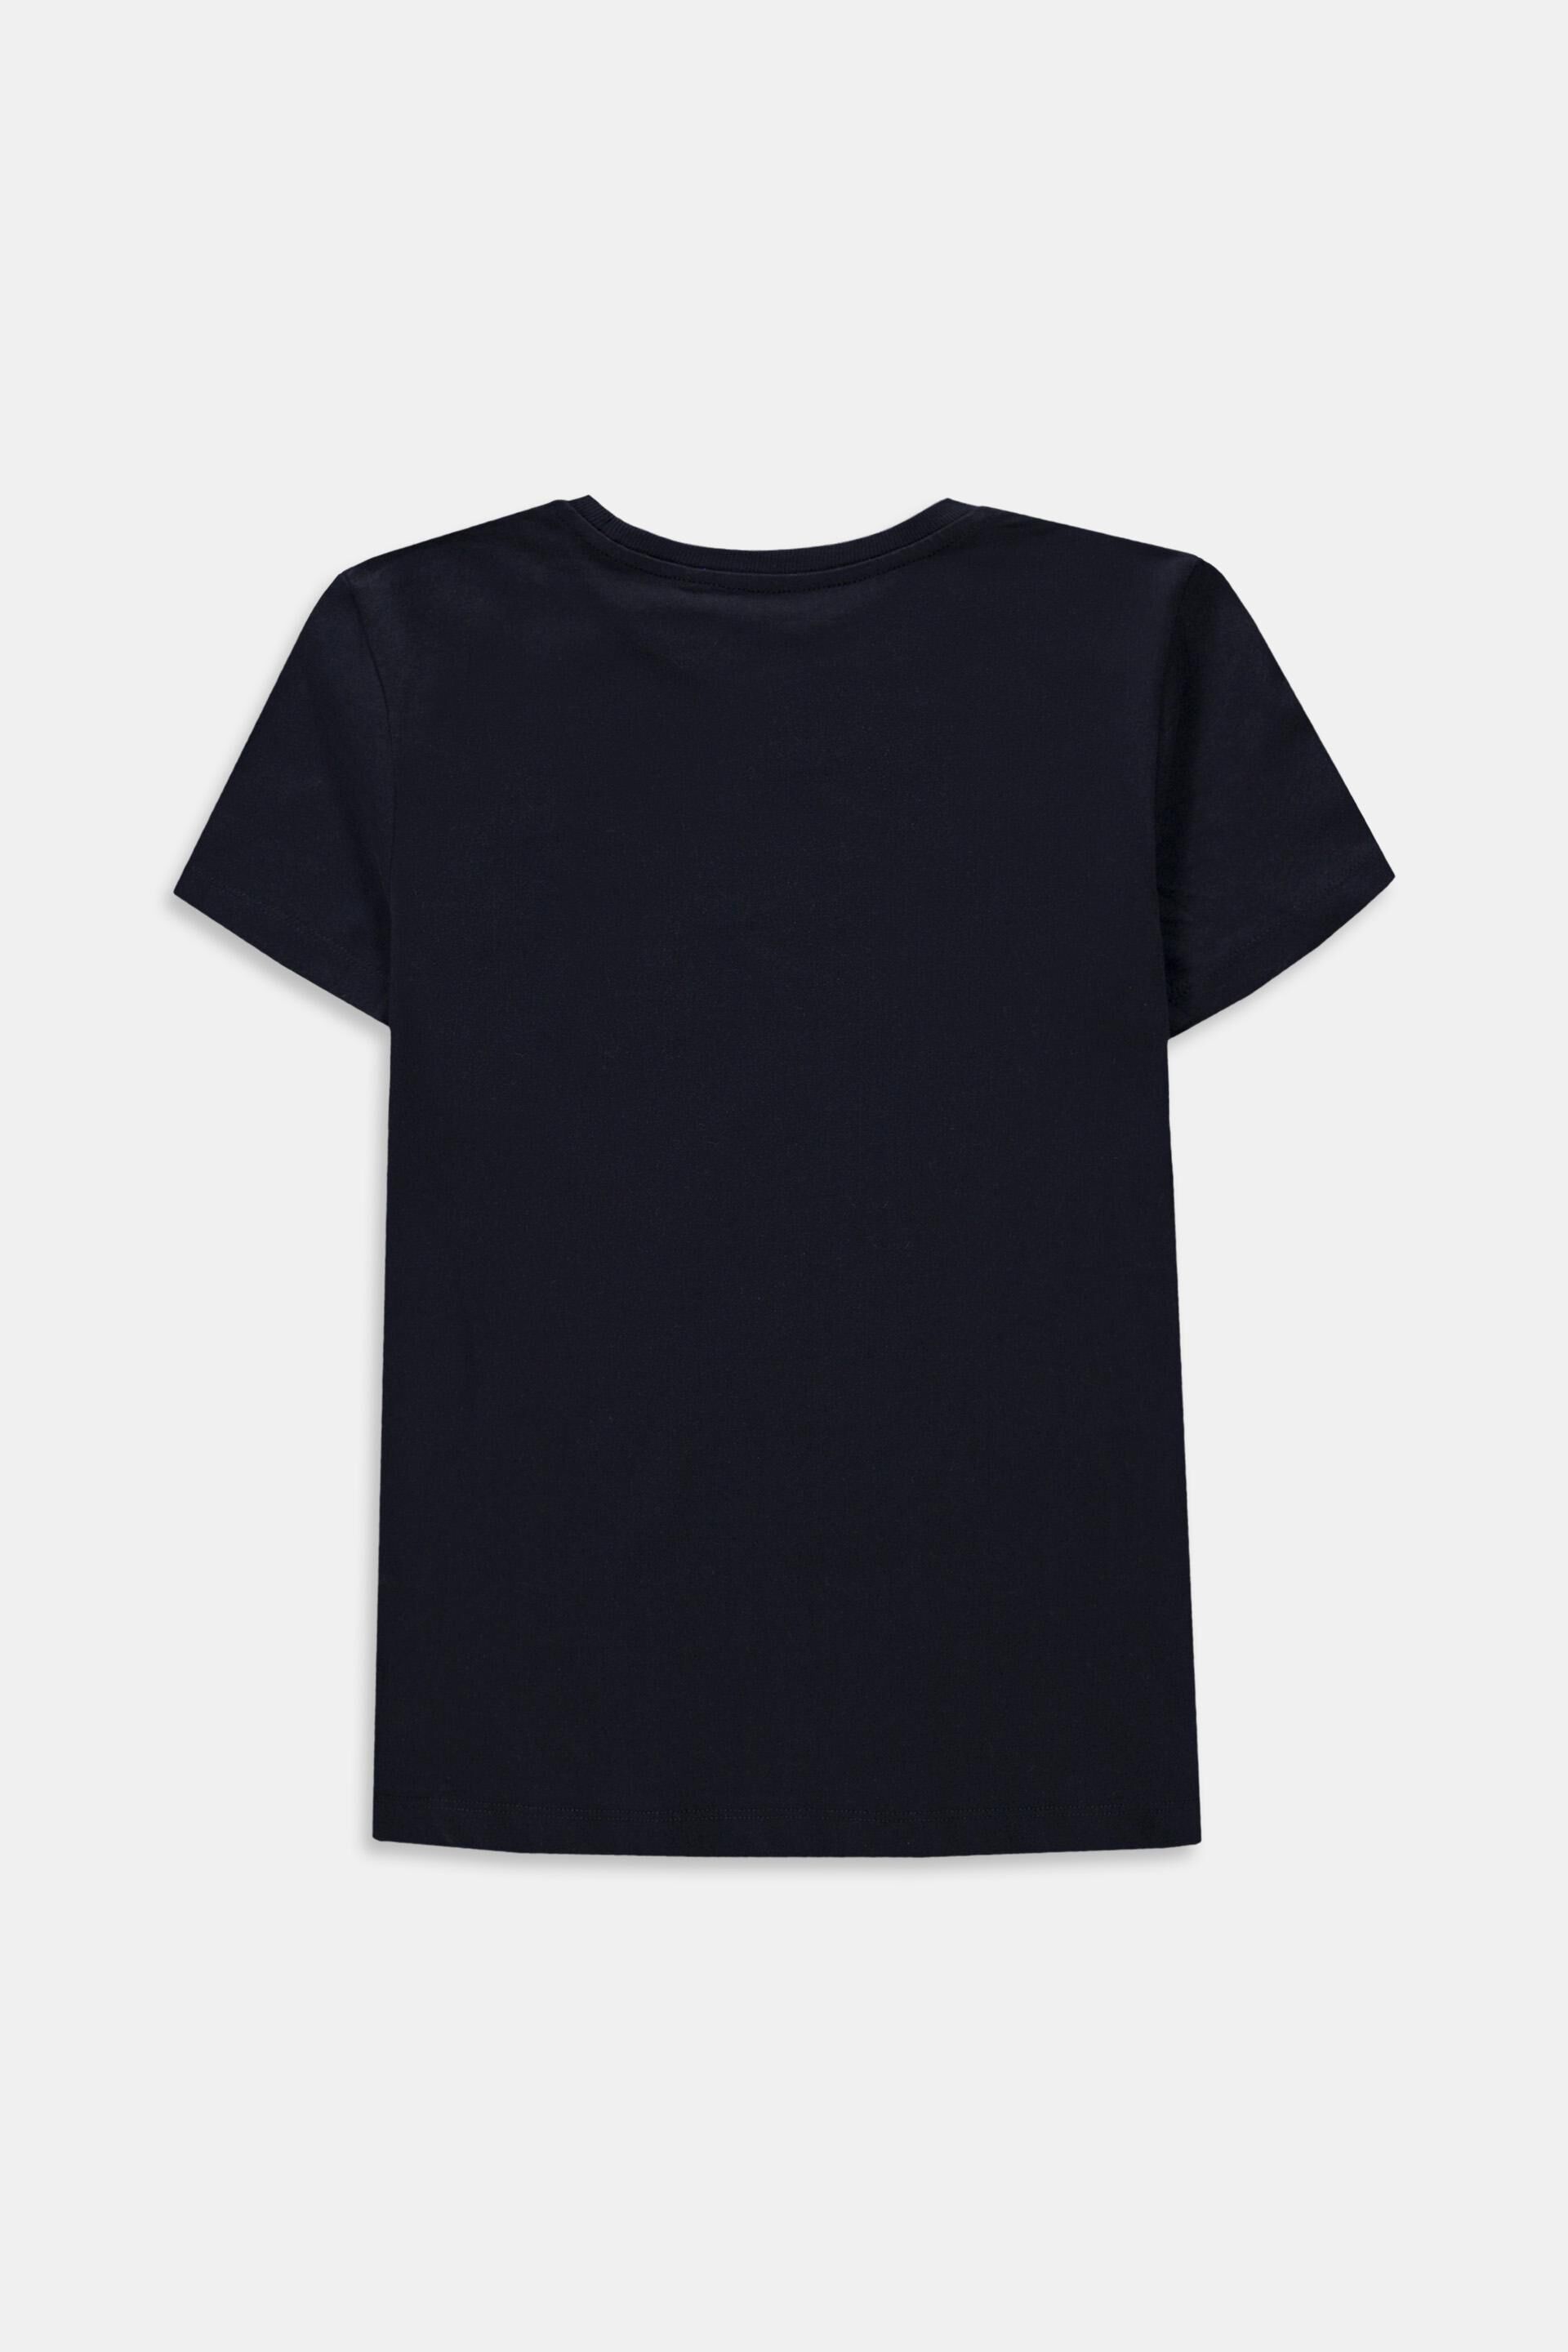 Sport T-Shirt Rabatt 70 % KINDER Hemden & T-Shirts NO STYLE Schwarz 6Y 